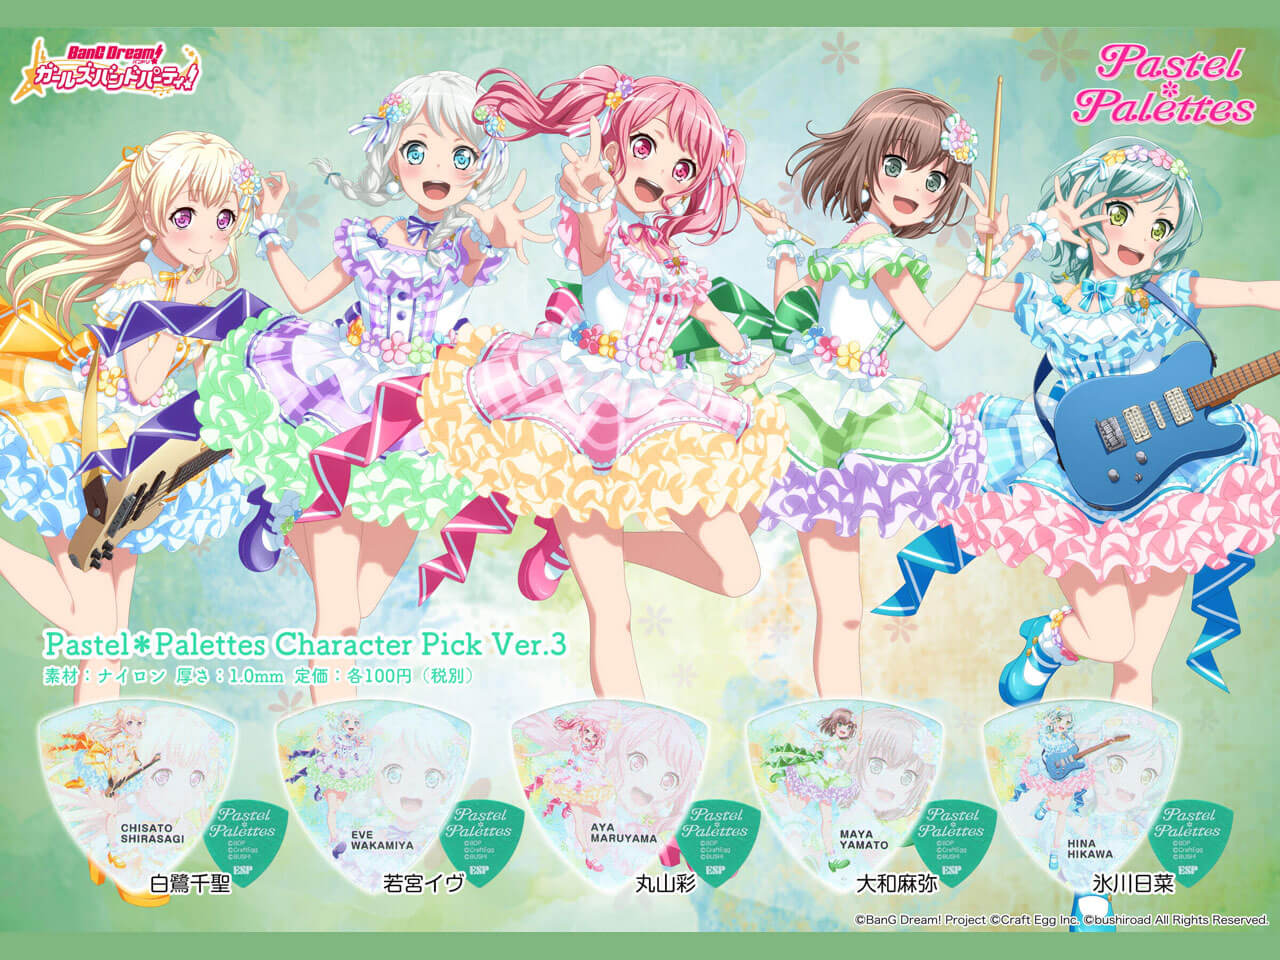 【ESP×BanG Dream!コラボピック】Pastel*Palettes Character Pick Ver.3 "丸山彩"（GBP AYA PASTEL PALETTES 3）＆”ハメパチ” セット